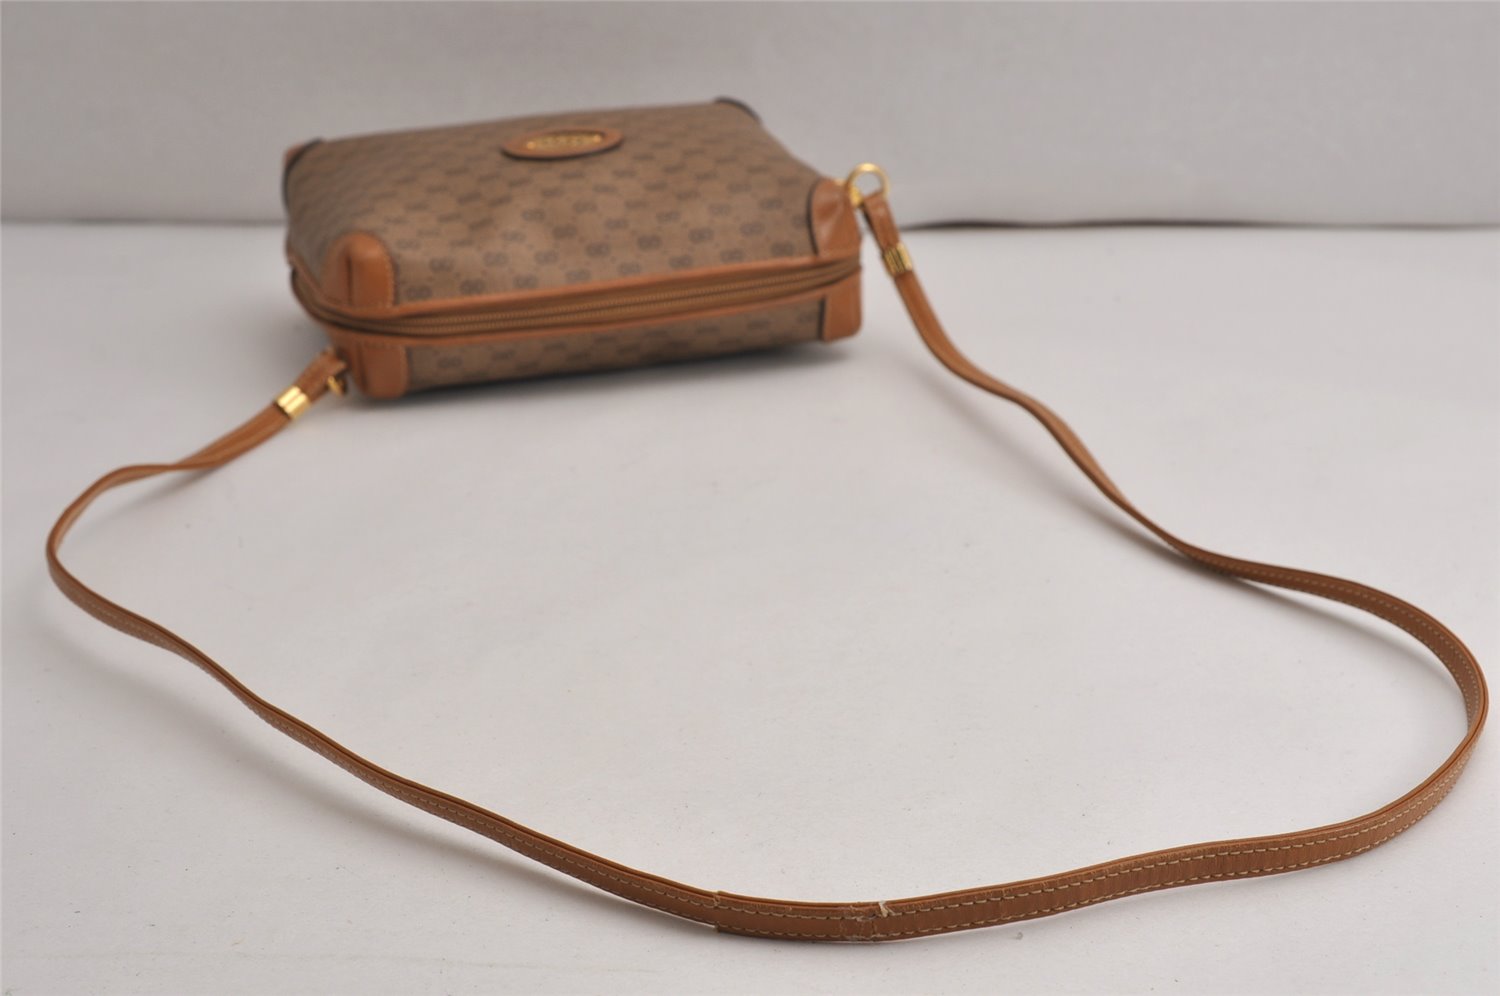 Authentic GUCCI Micro GG PVC Leather Shoulder Cross Bag Purse Brown Junk 0110K